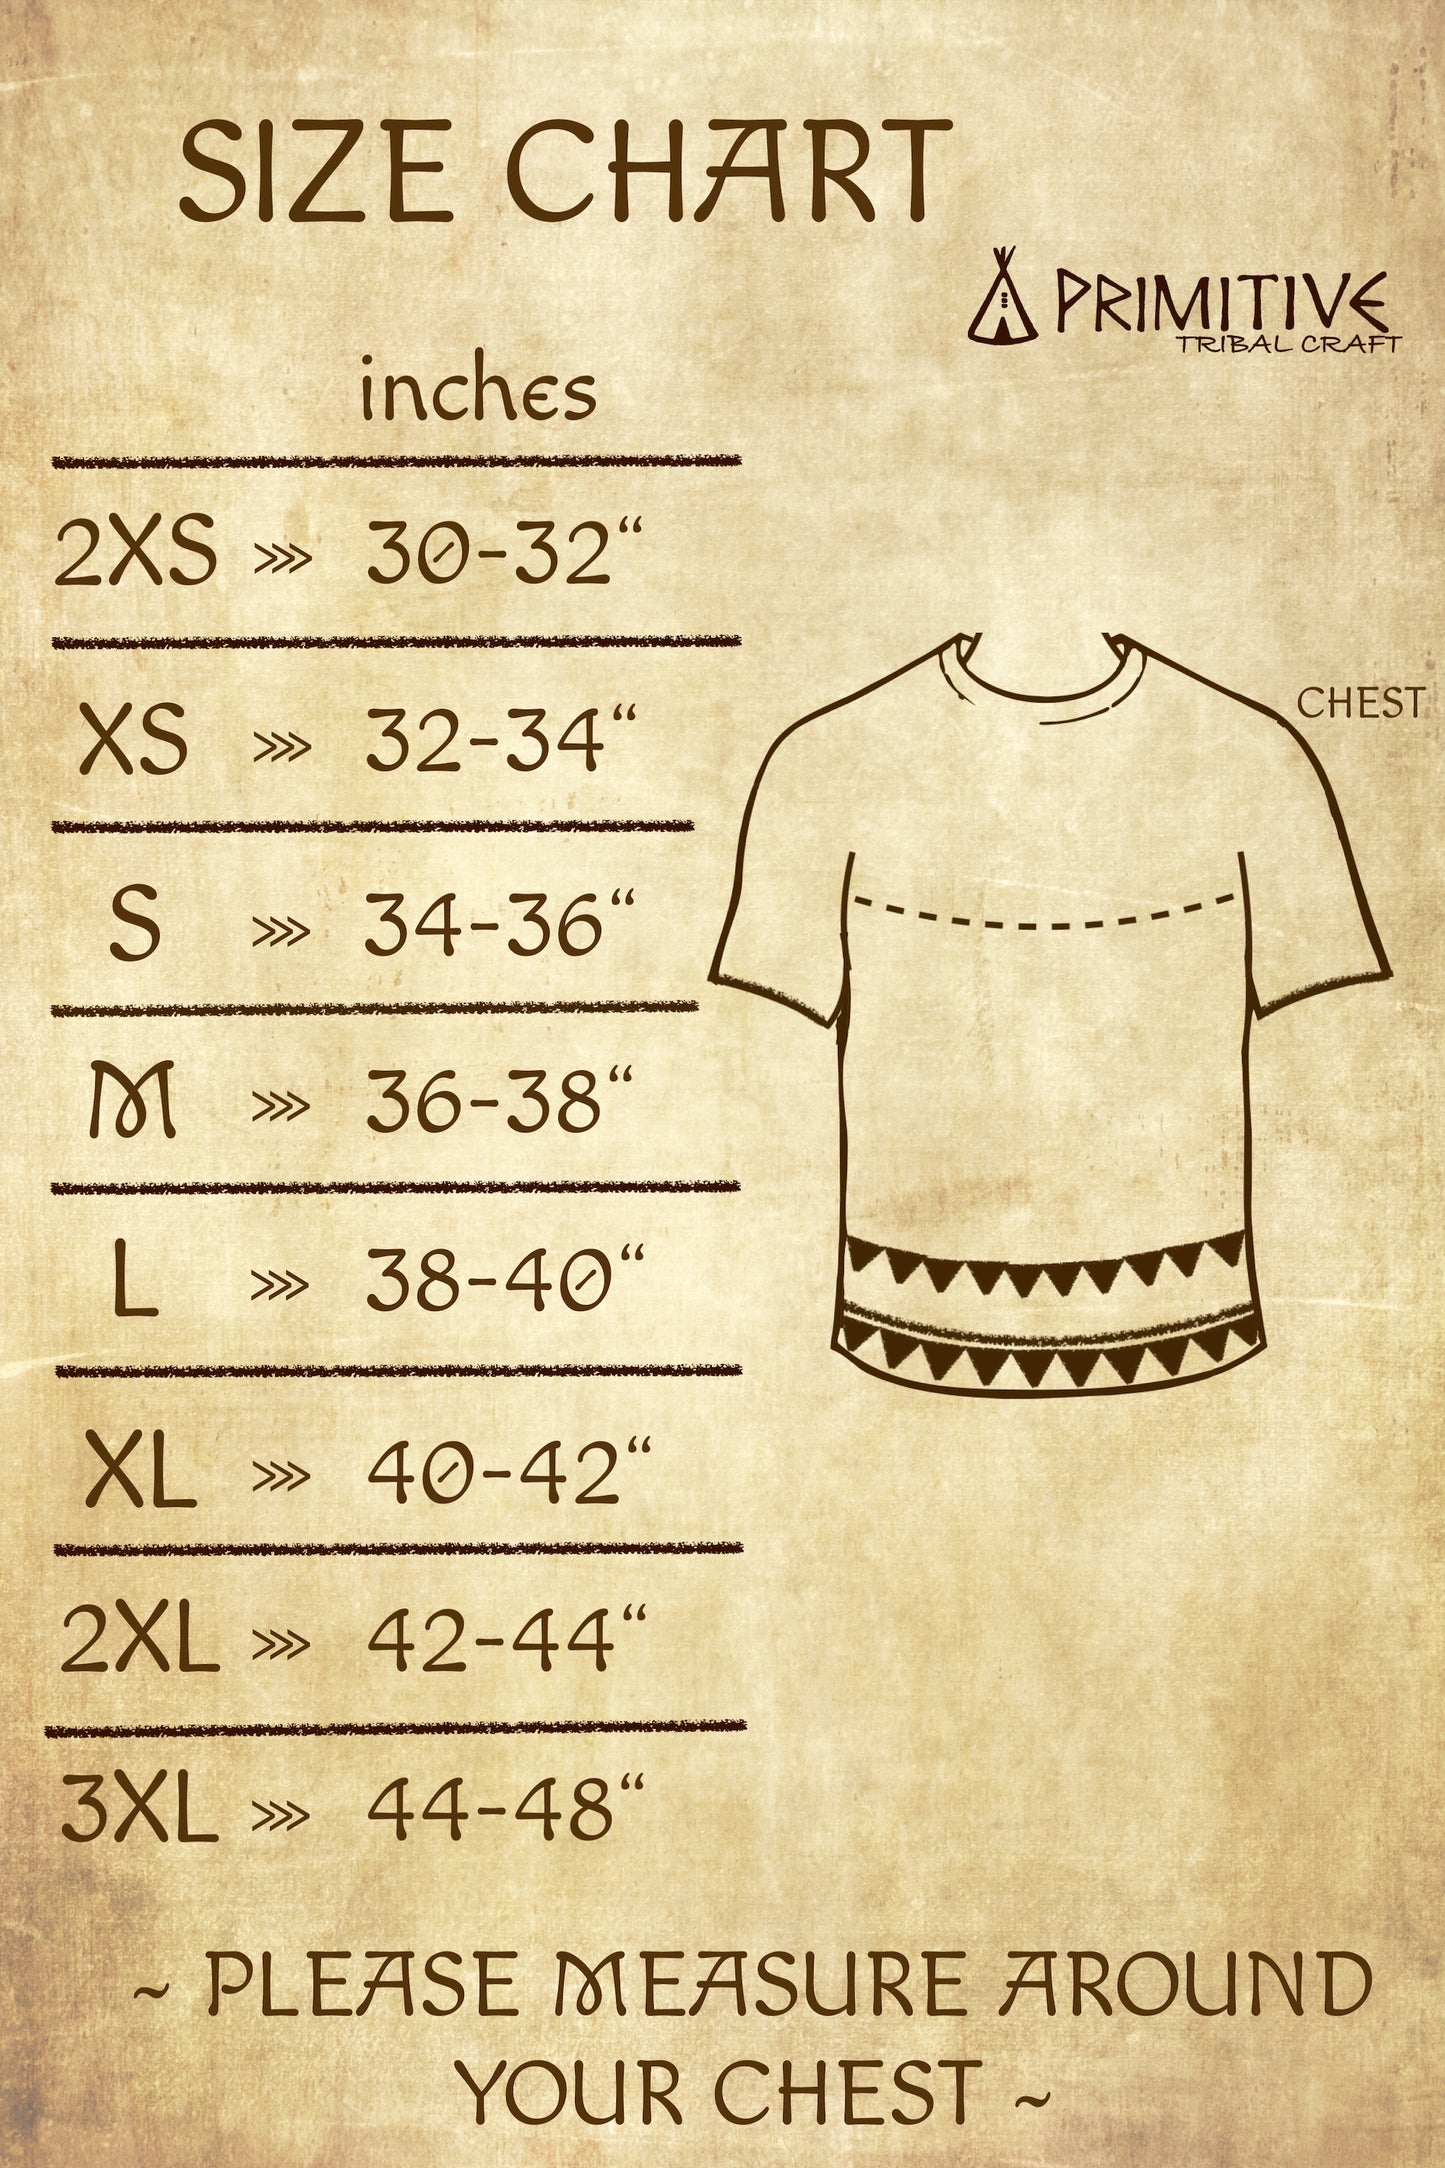 Tribal Dance T-Shirt ⋙ Block Printed ⋙ Organic Cotton